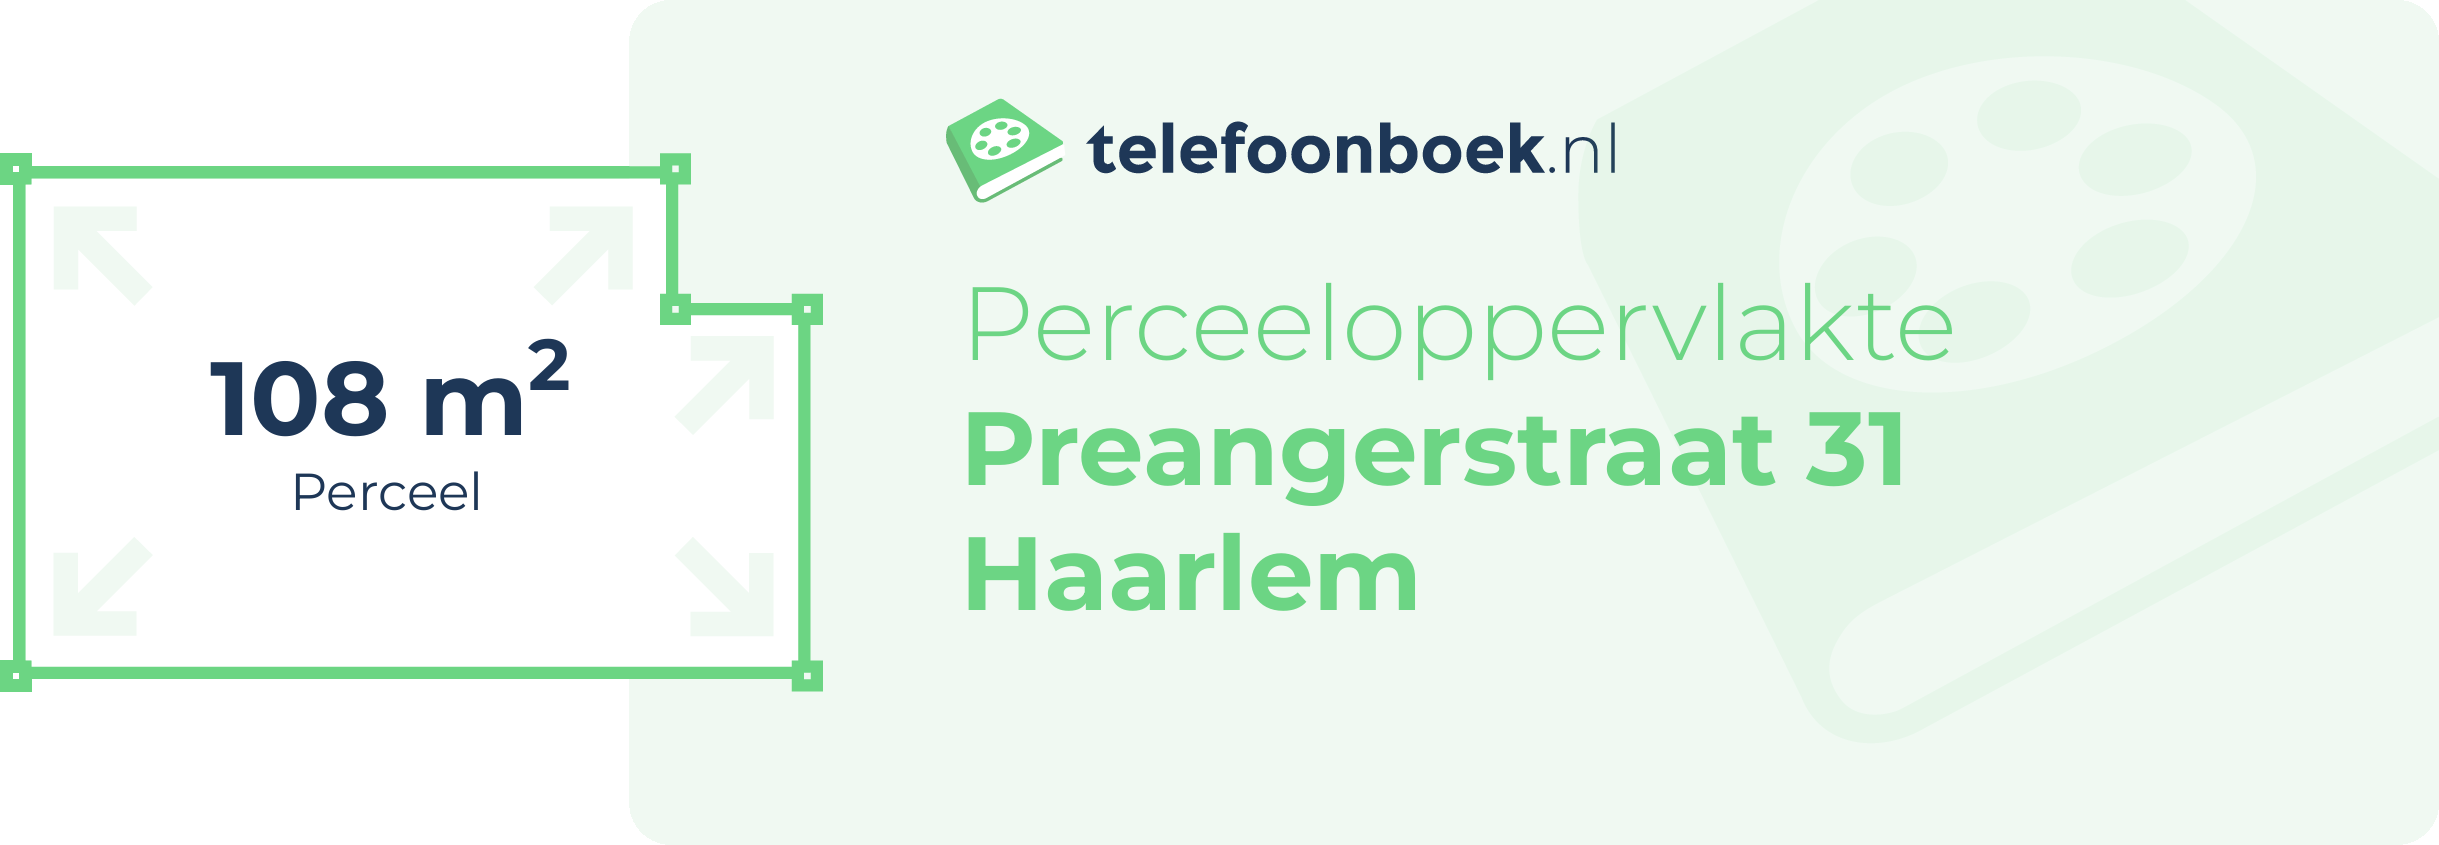 Perceeloppervlakte Preangerstraat 31 Haarlem